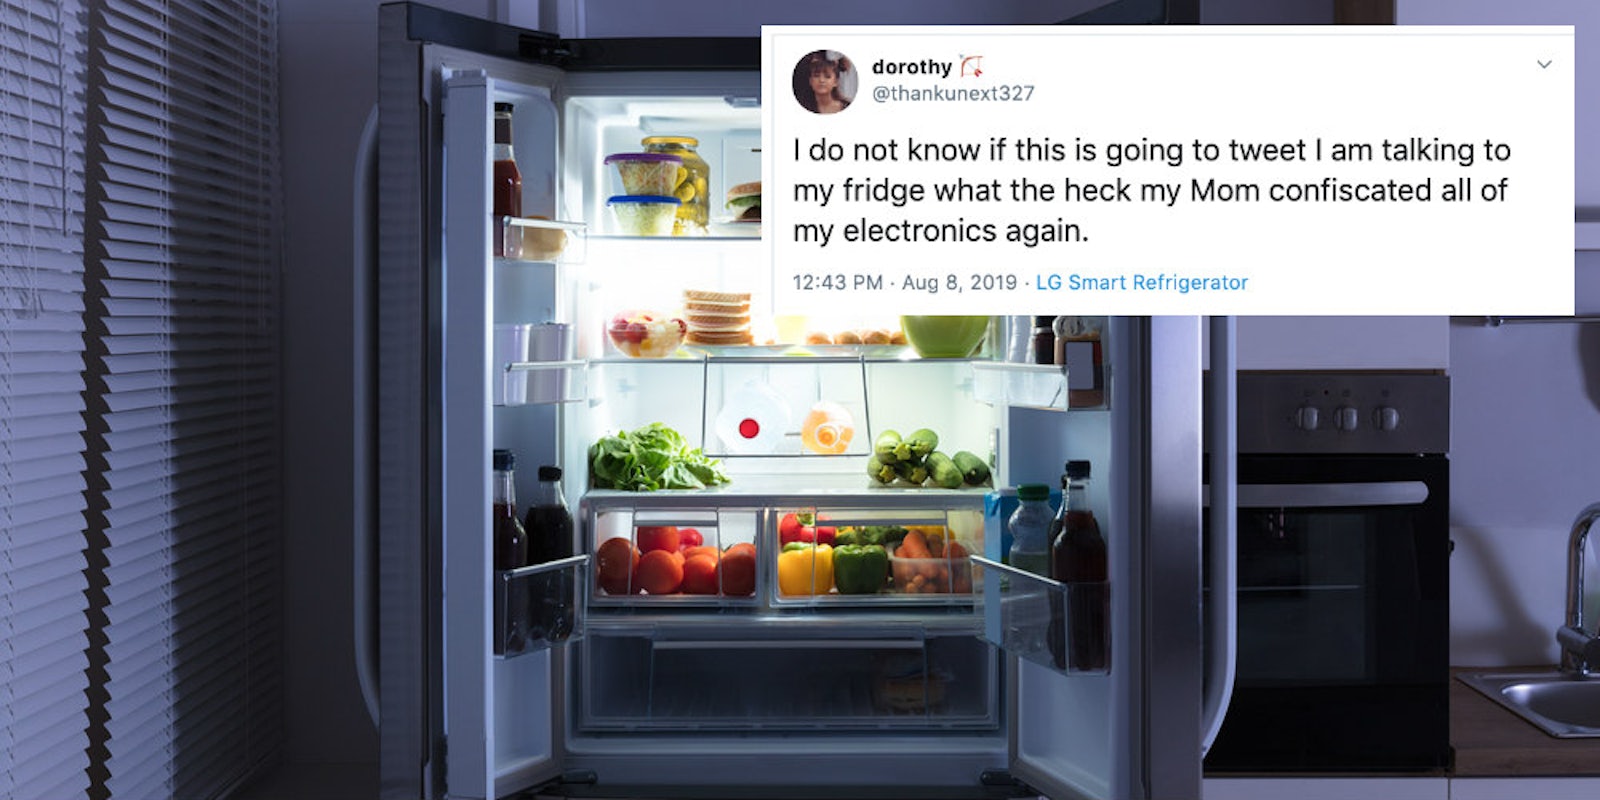 fridge memes